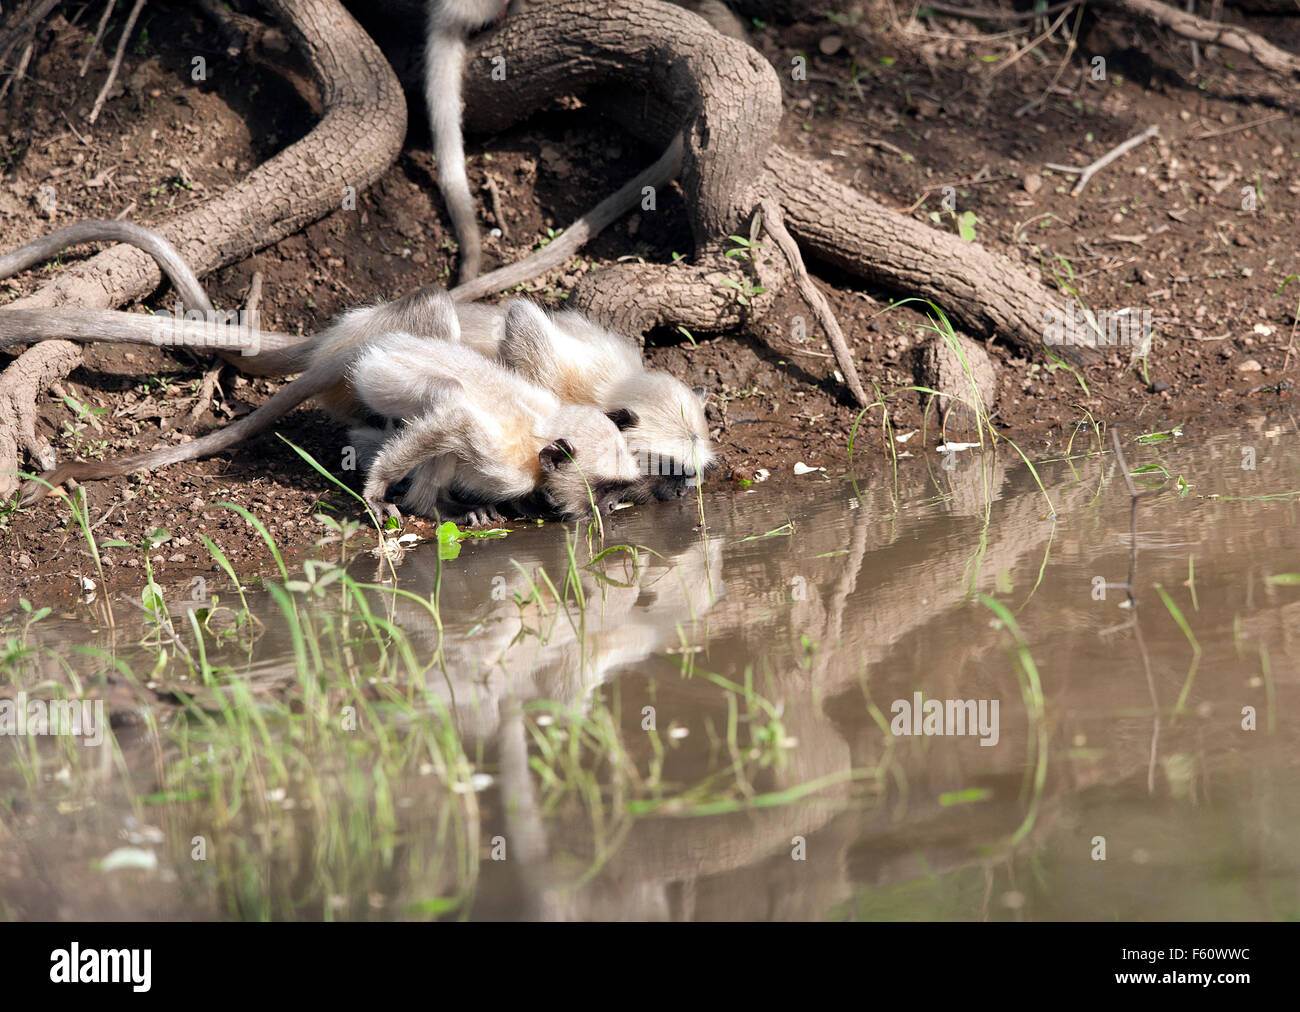 The image of Common Langur ( Presbytis entellus ) was take in Tadoba national park, India Stock Photo